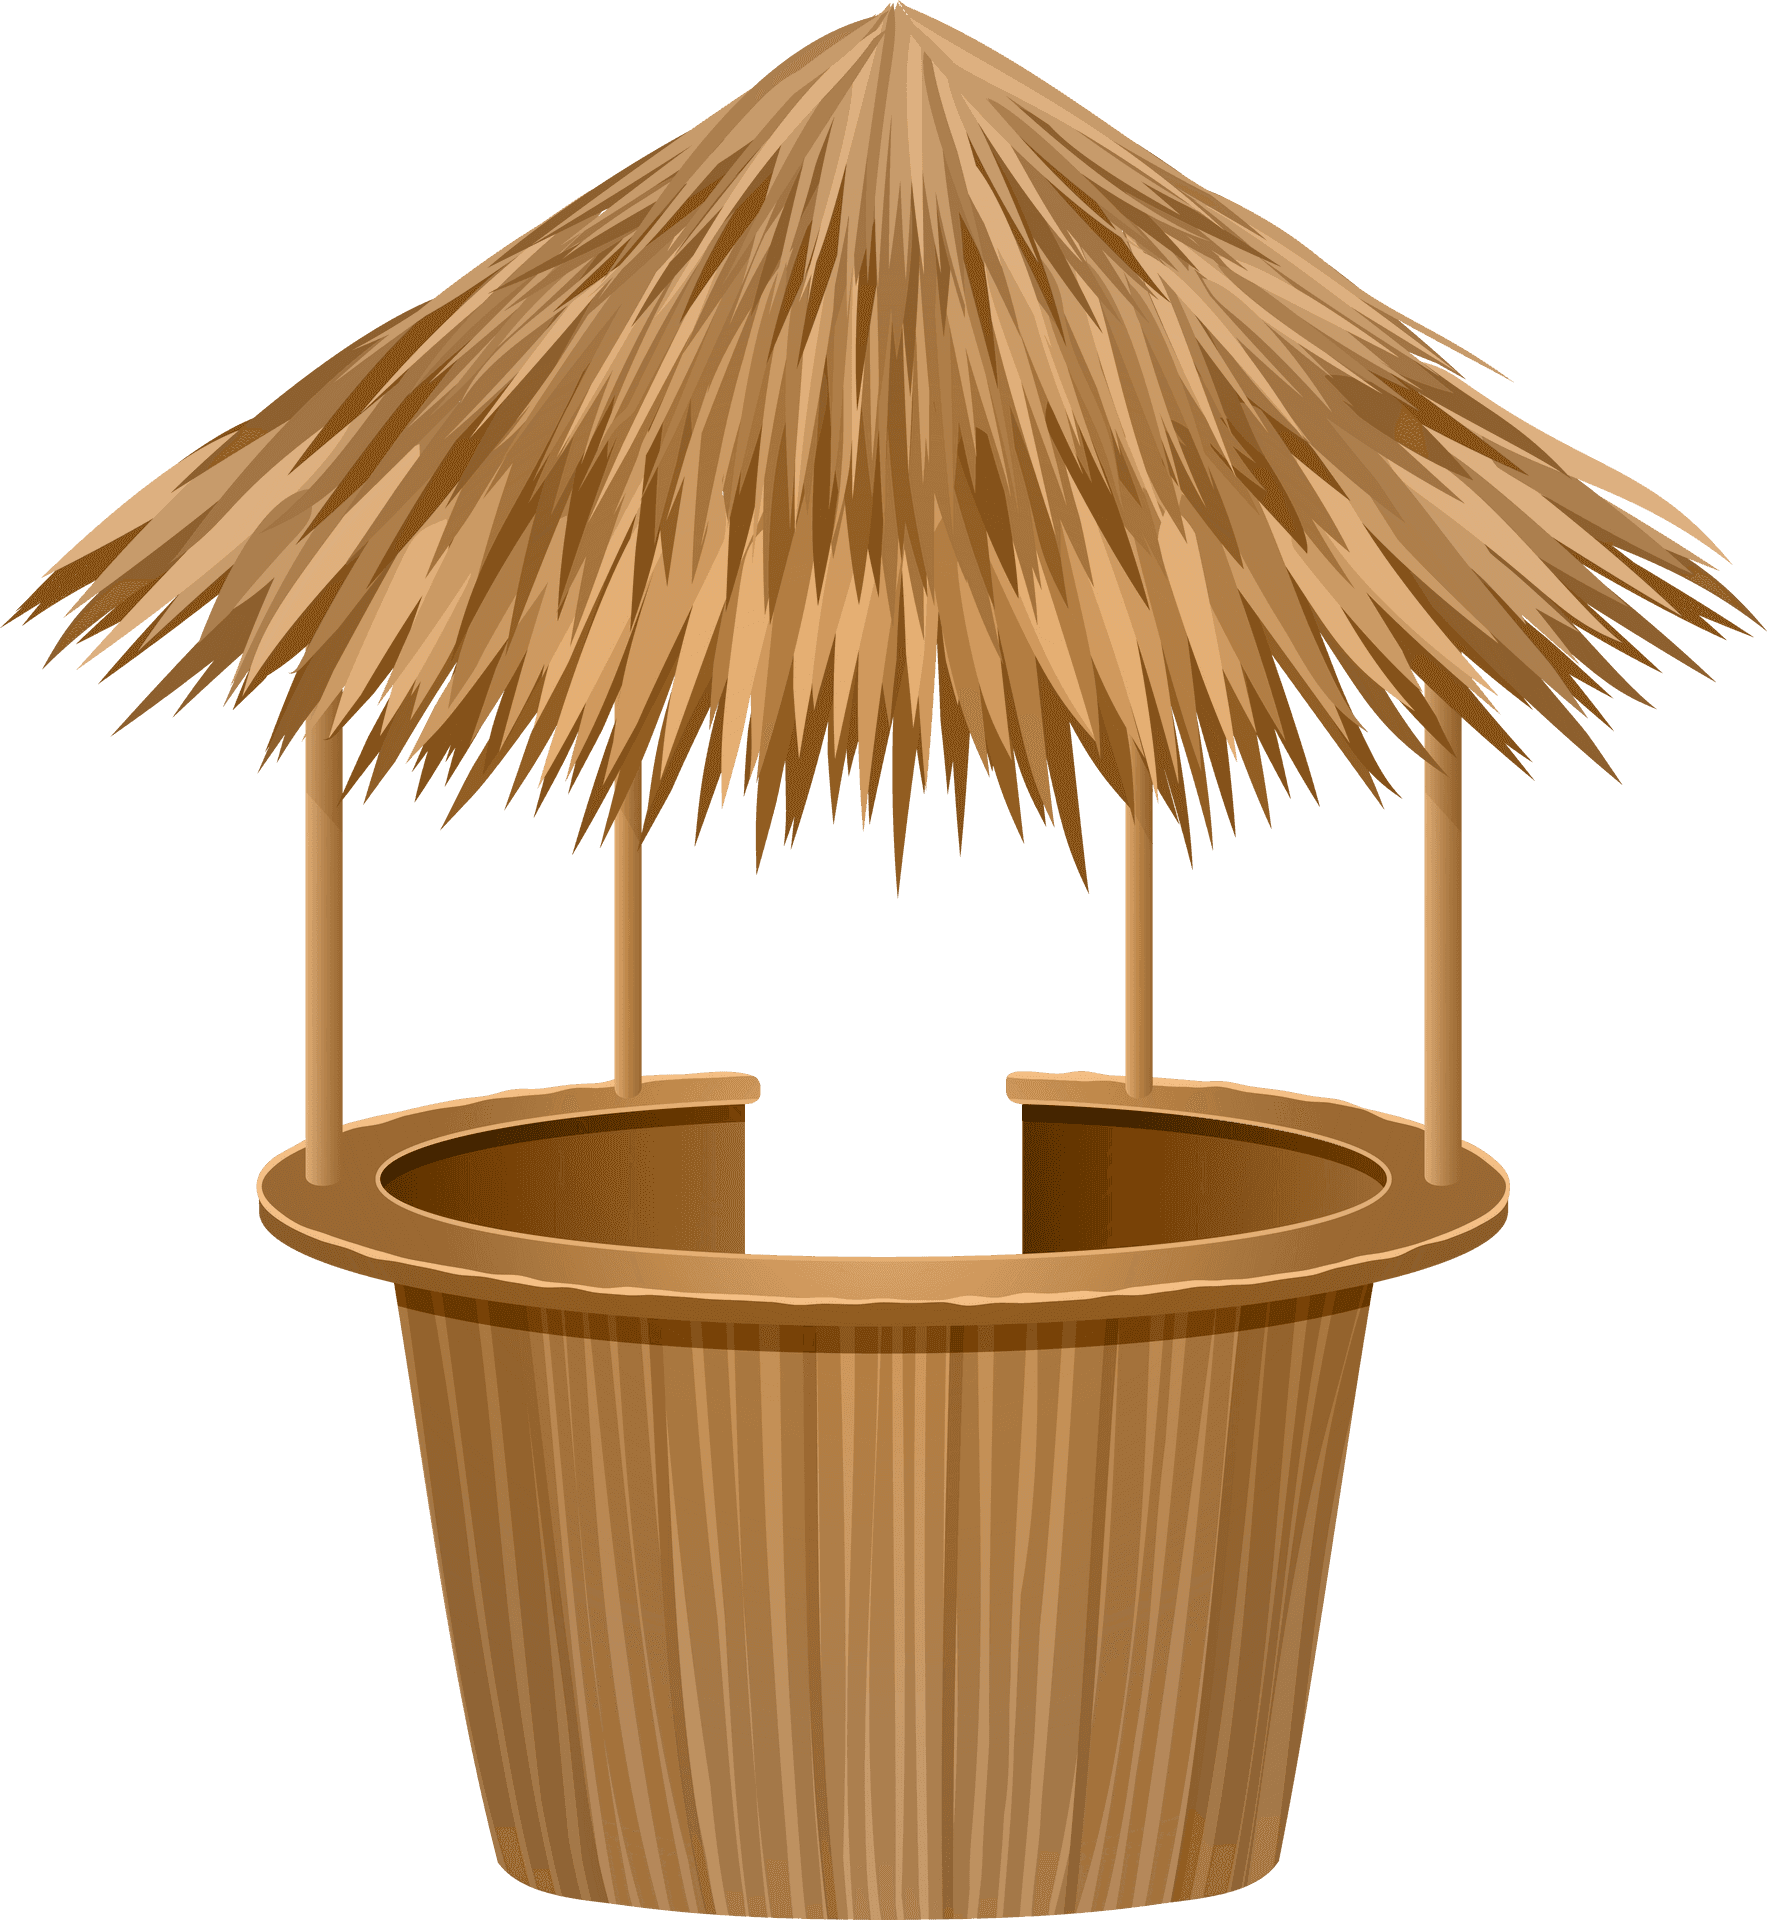 Thatched Roof Tiki Bar Illustration PNG